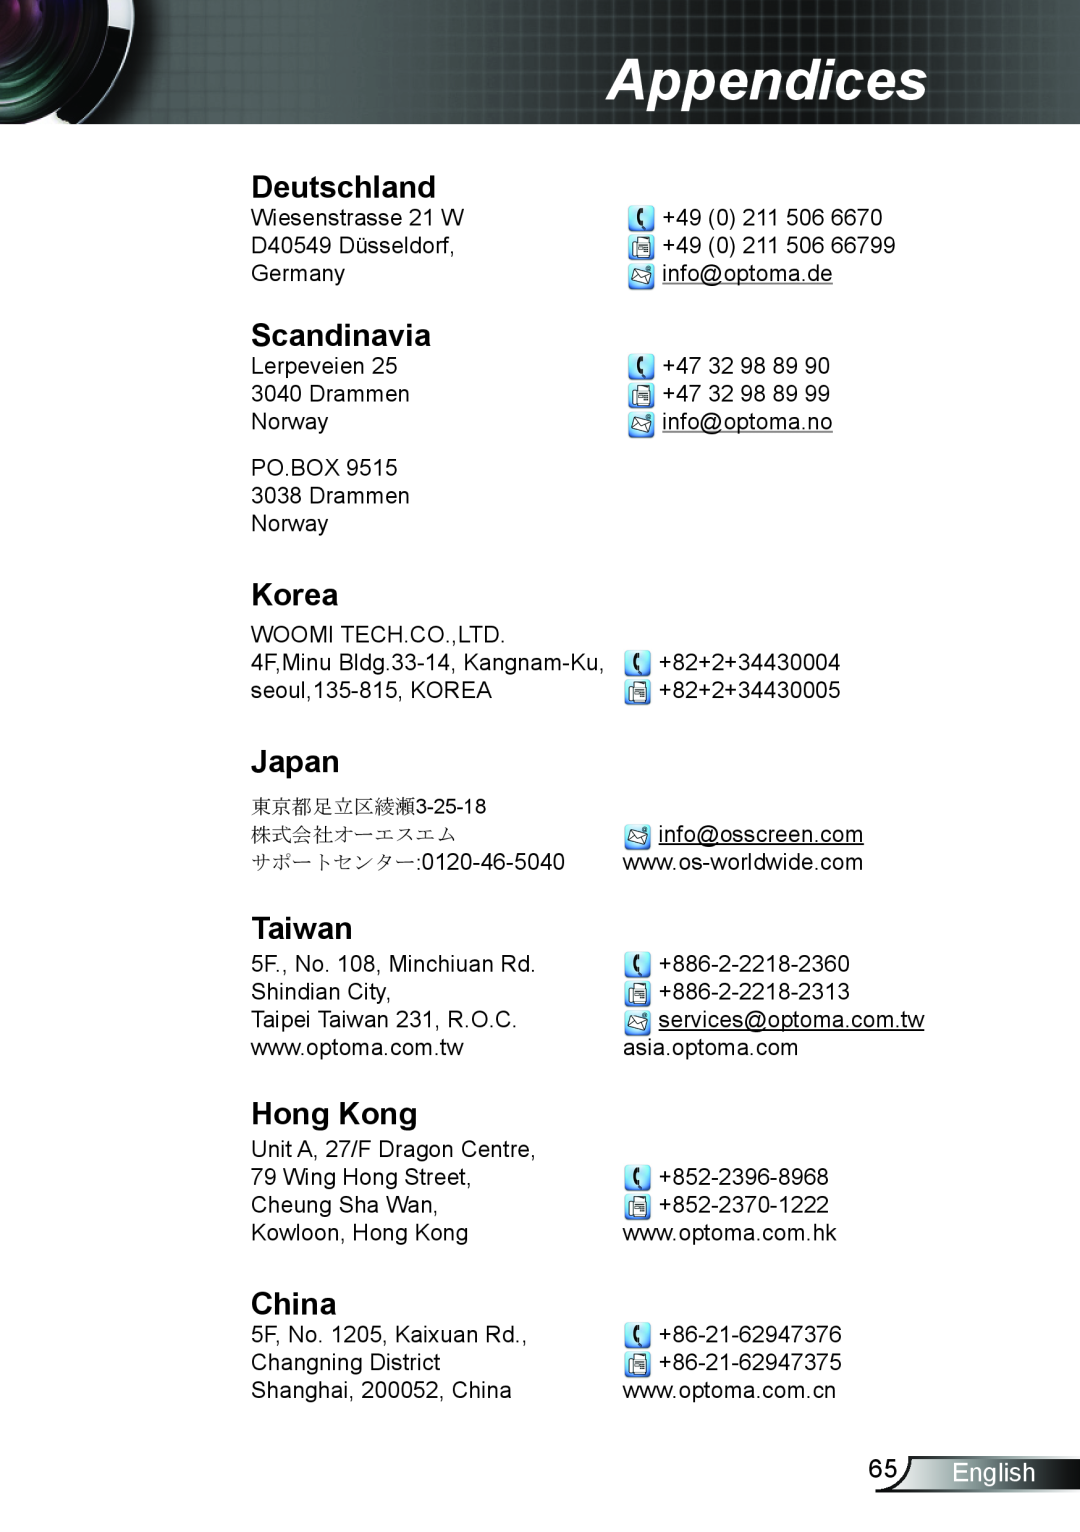 Optoma Technology TW762GOV manual Deutschland, Scandinavia, Korea, Japan, Taiwan, Hong Kong, China, English, Appendices 